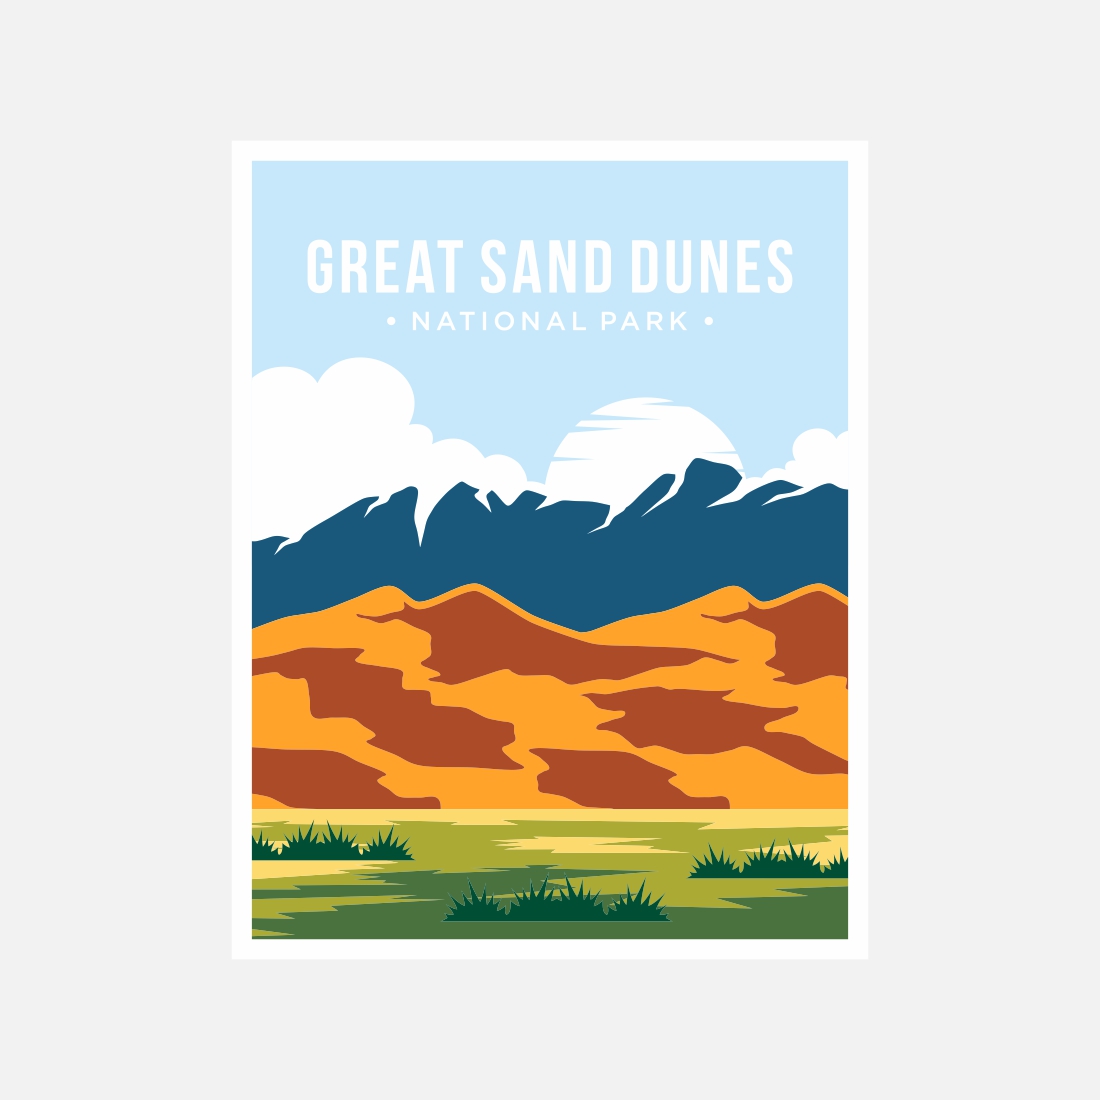 Great Sand Dune national park poster vector illustration design – Only $8 preview image.